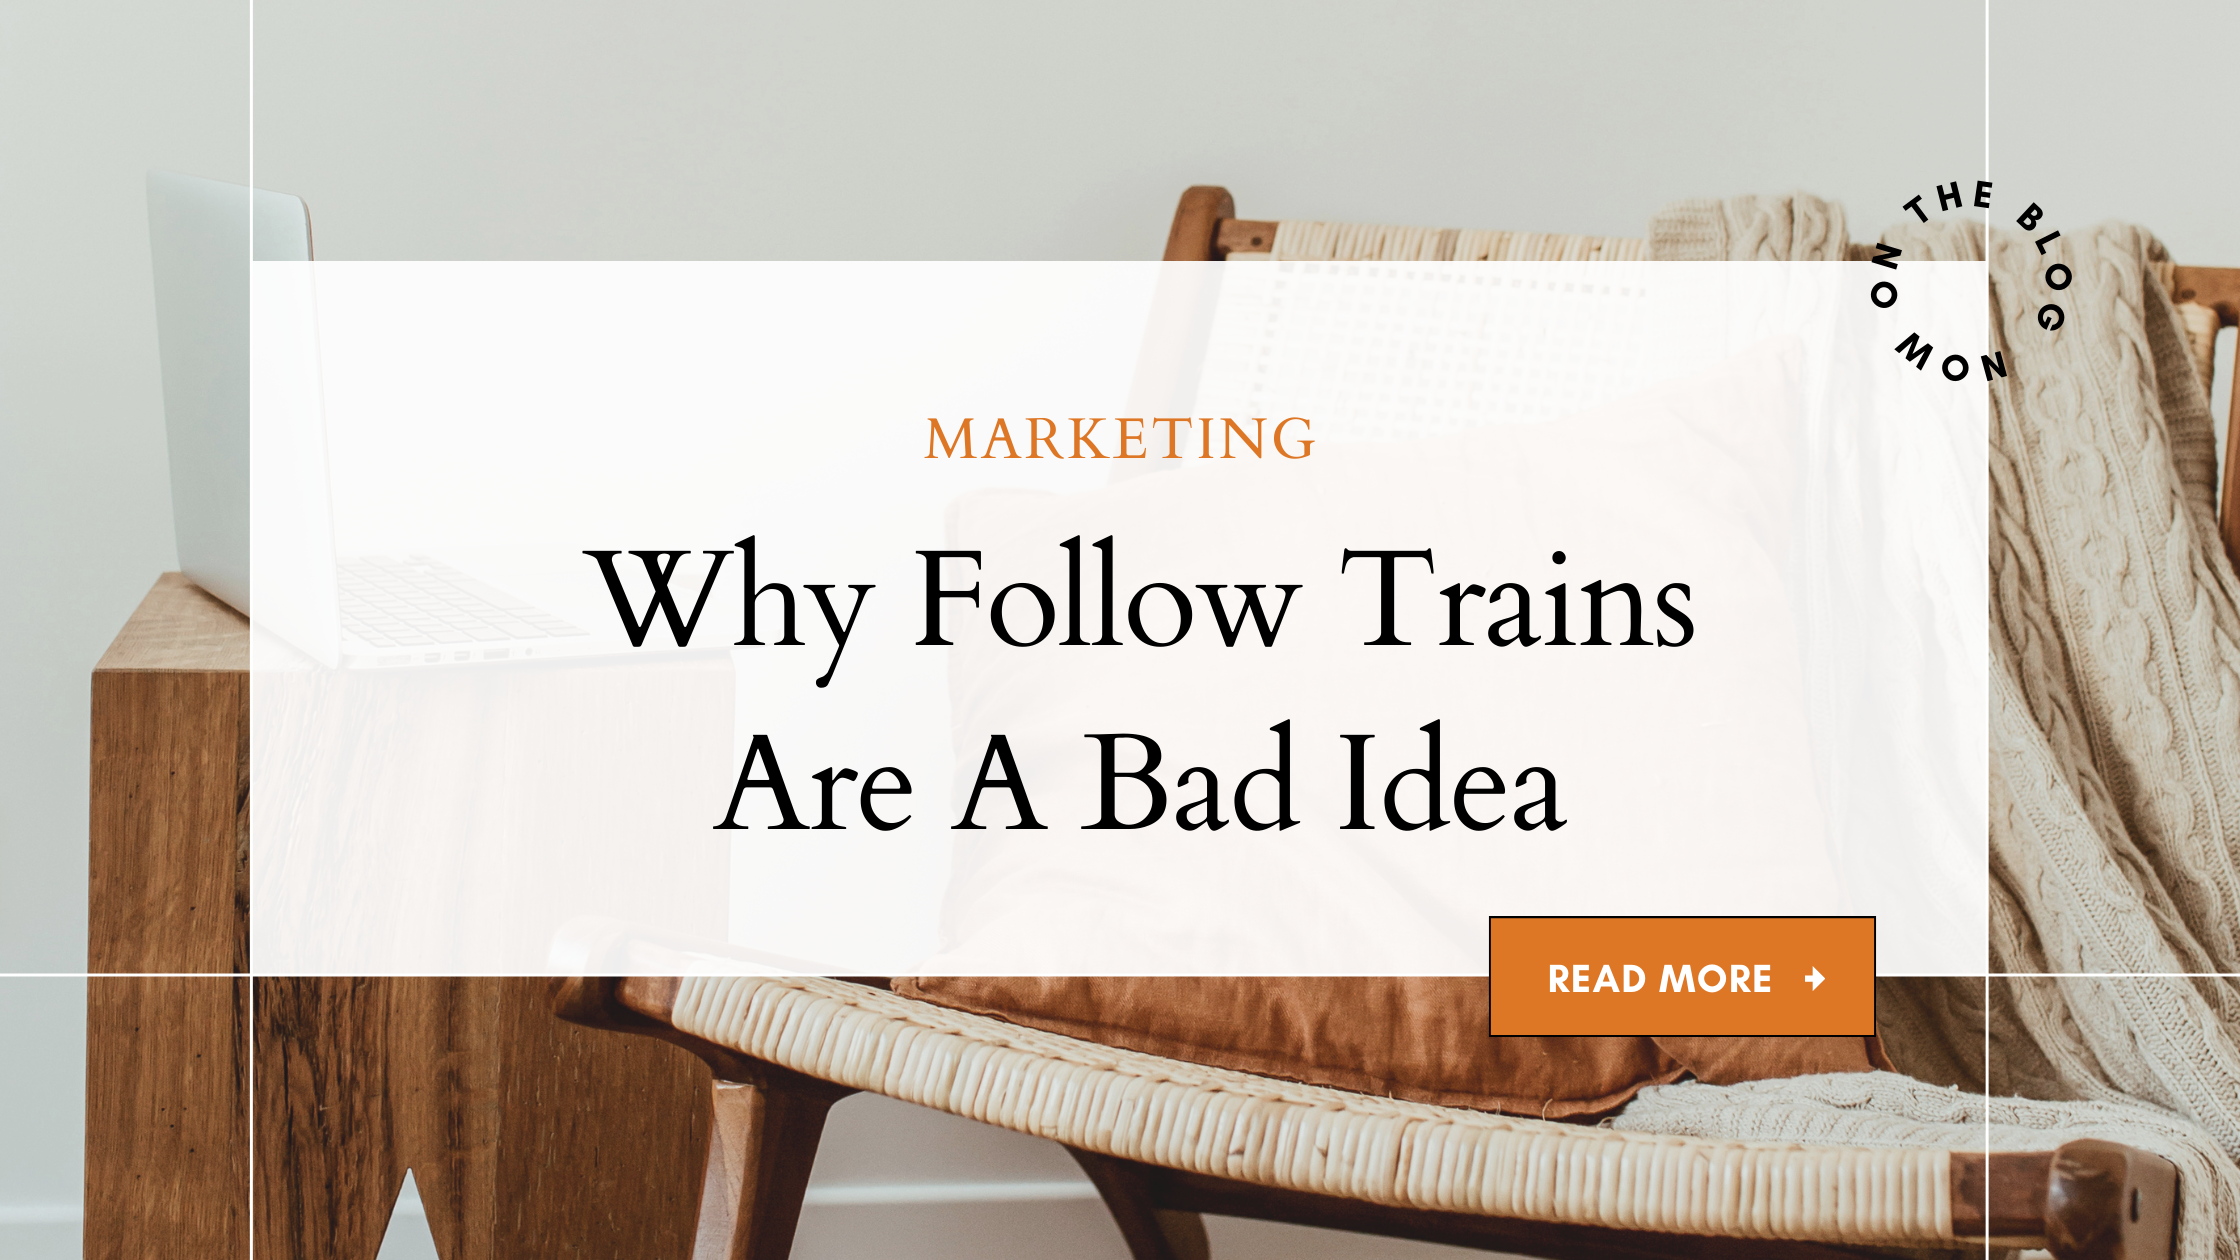 Why Follow trains on social media are a bad idea